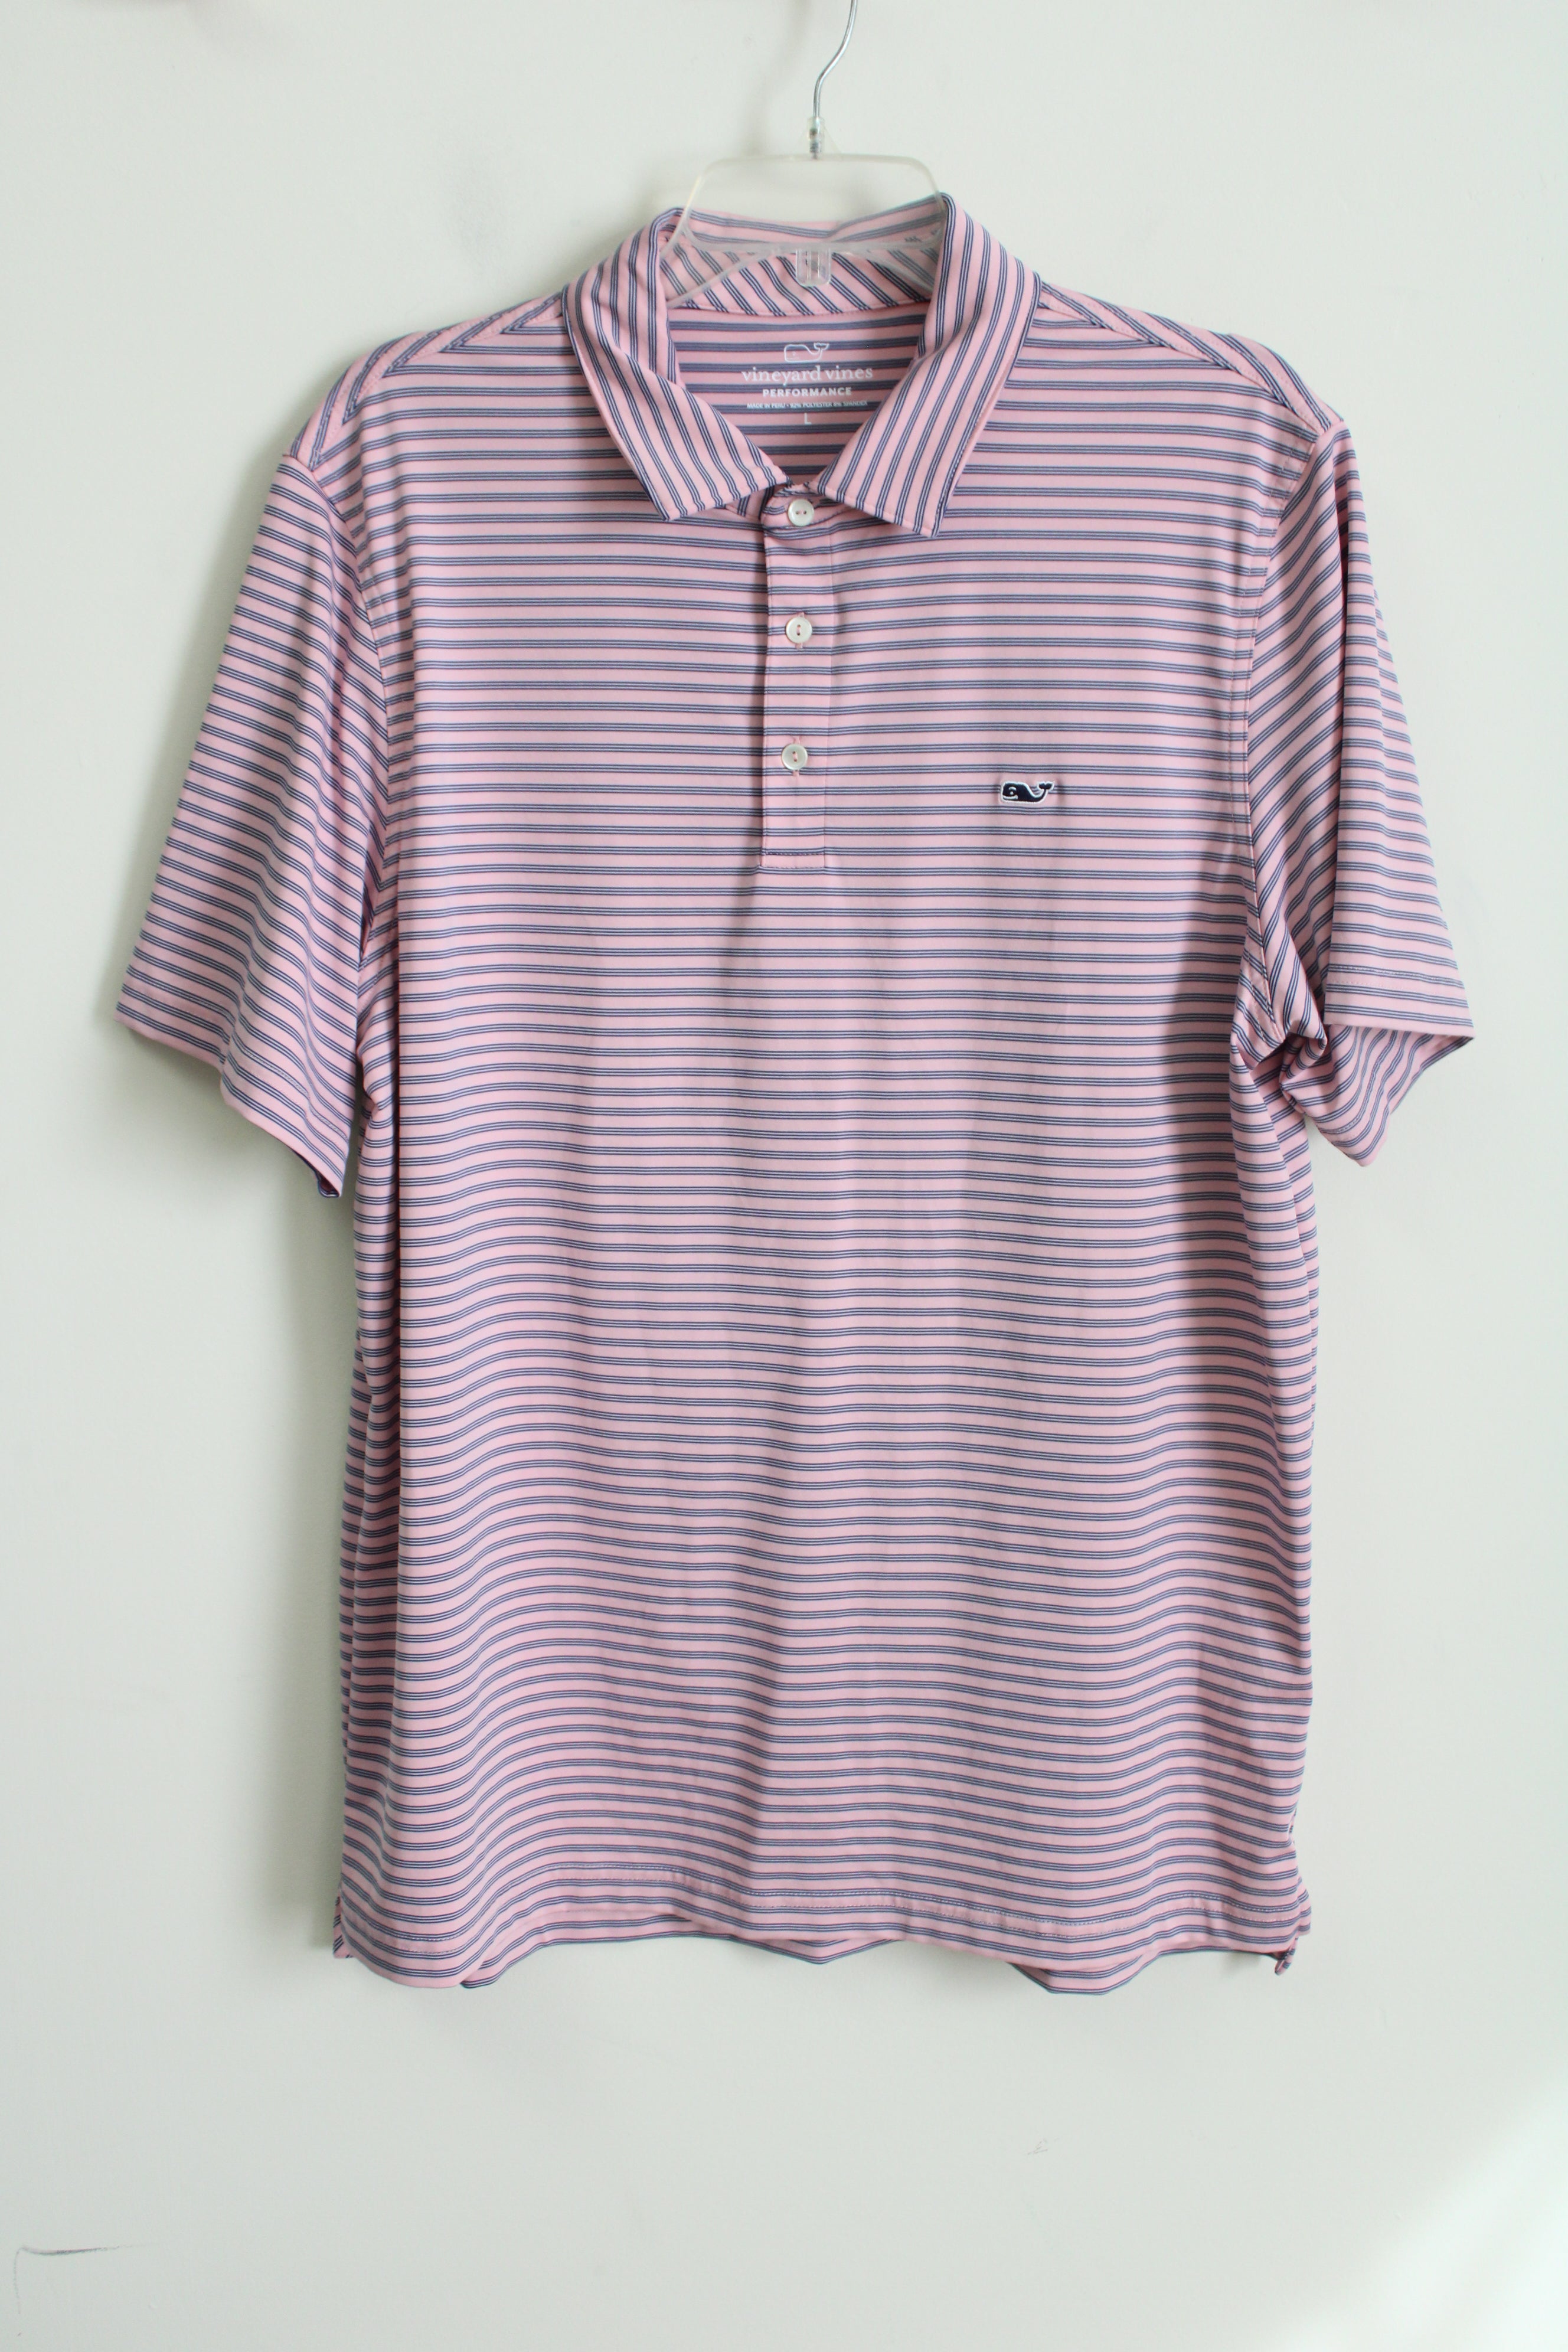 Vineyard Vines Performance Pink & Blue Striped Polo Shirt | L